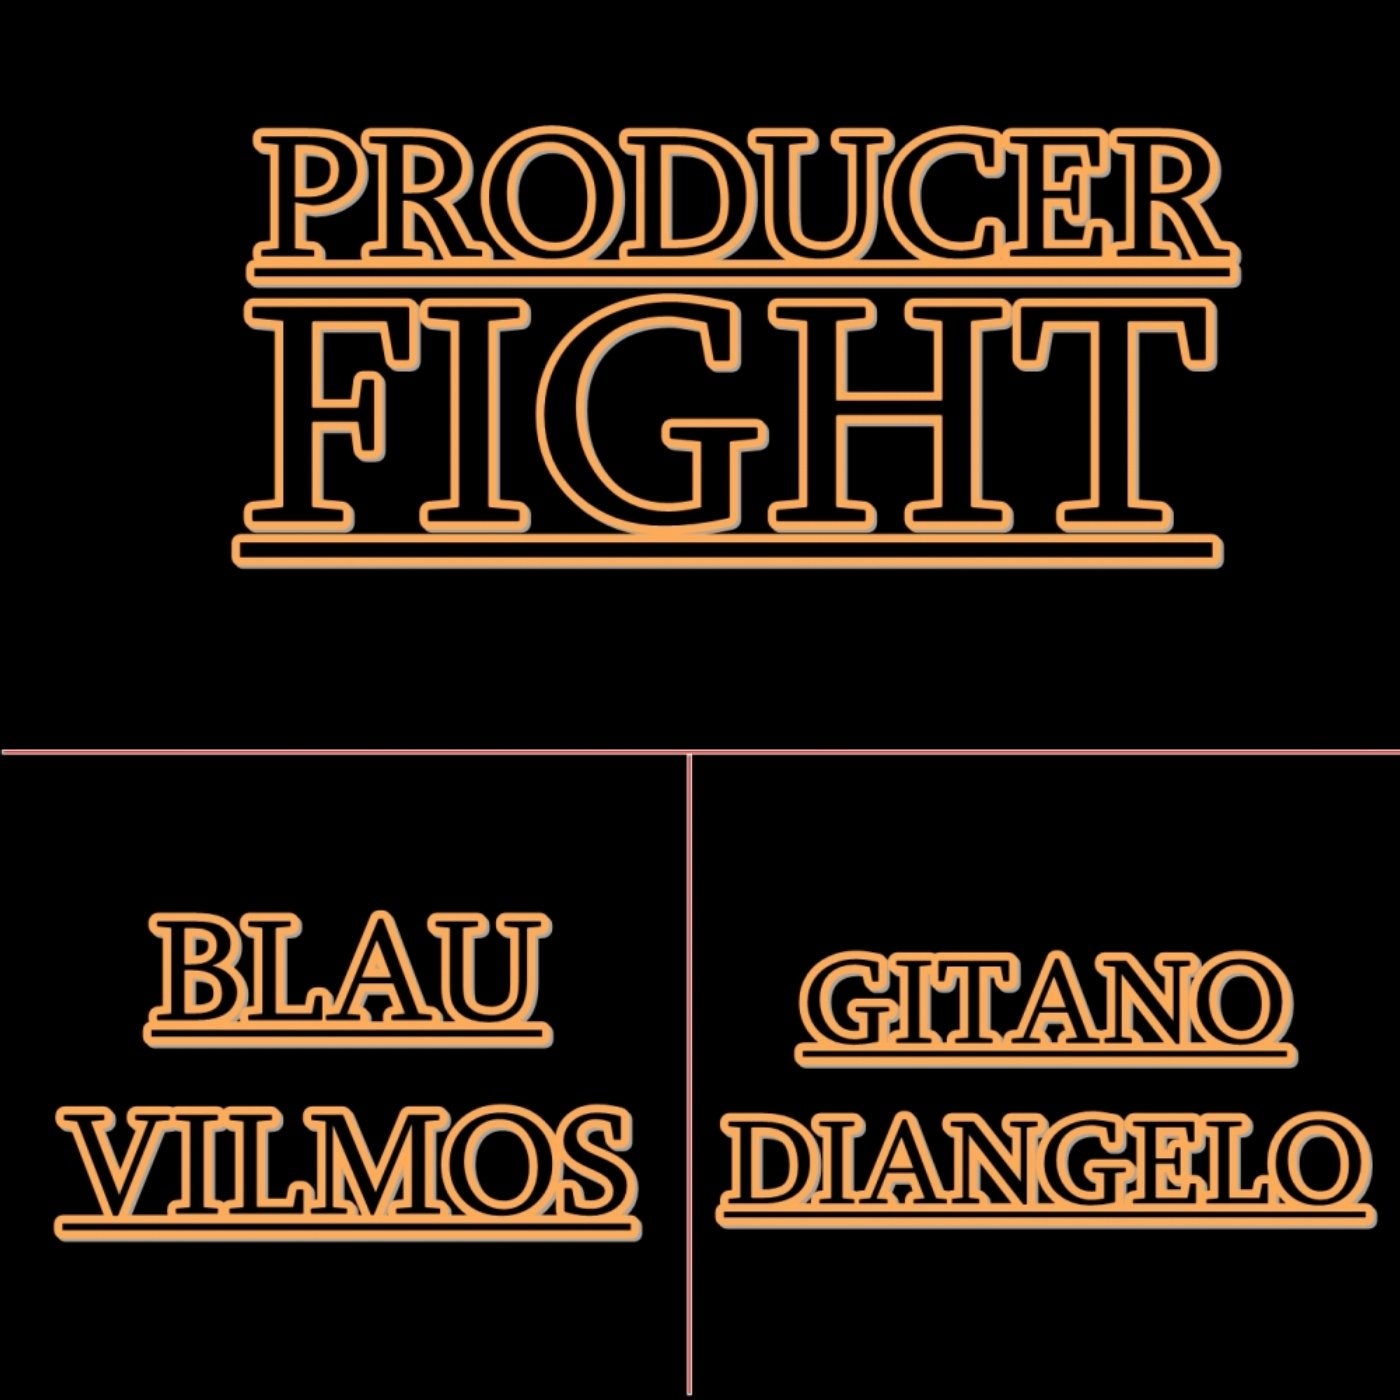 Producer Fight, Vol. 2